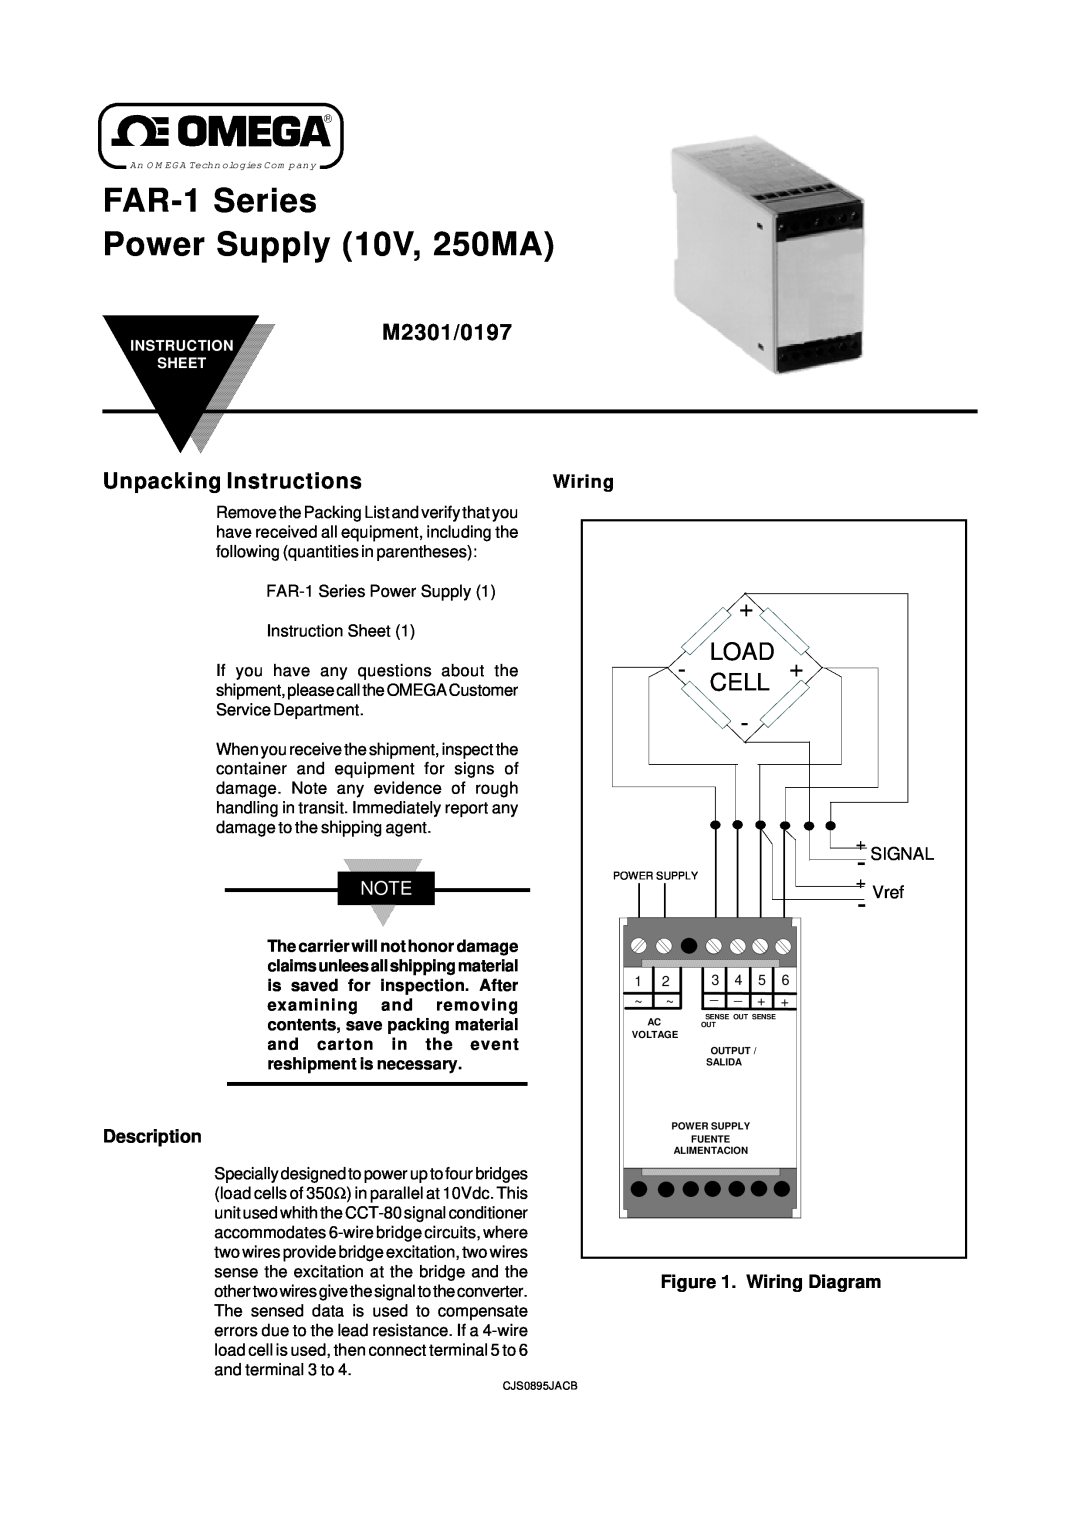 Omega Speaker Systems instruction sheet Description, Wiring Diagram, FAR-1 Series Power Supply 10V, 250MA, Load 